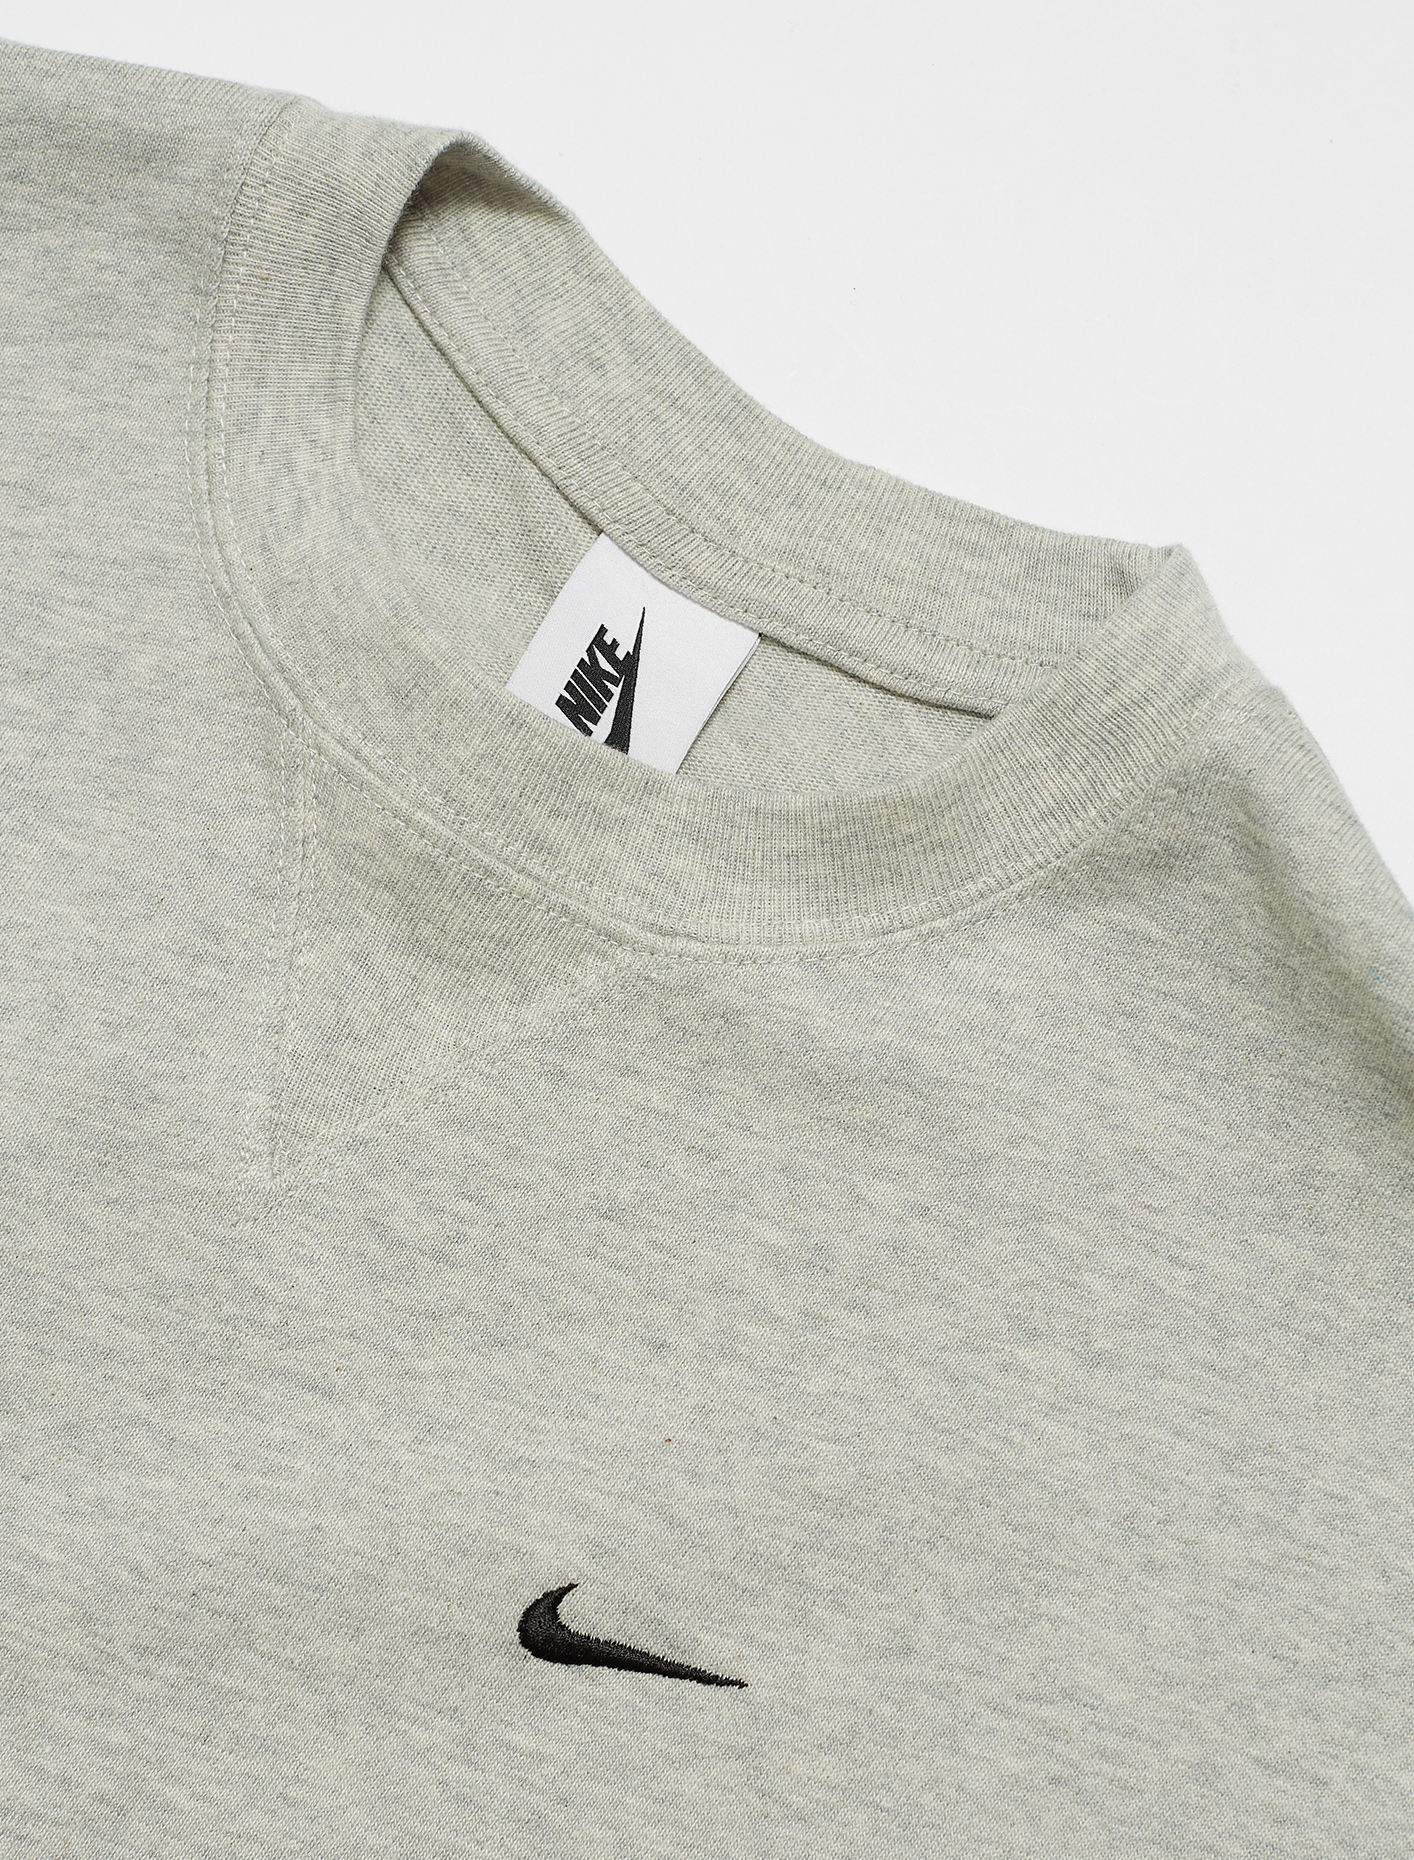 Nike x Kim Jones T-Shirt in Grey Heather | Voo Store Berlin | Worldwide